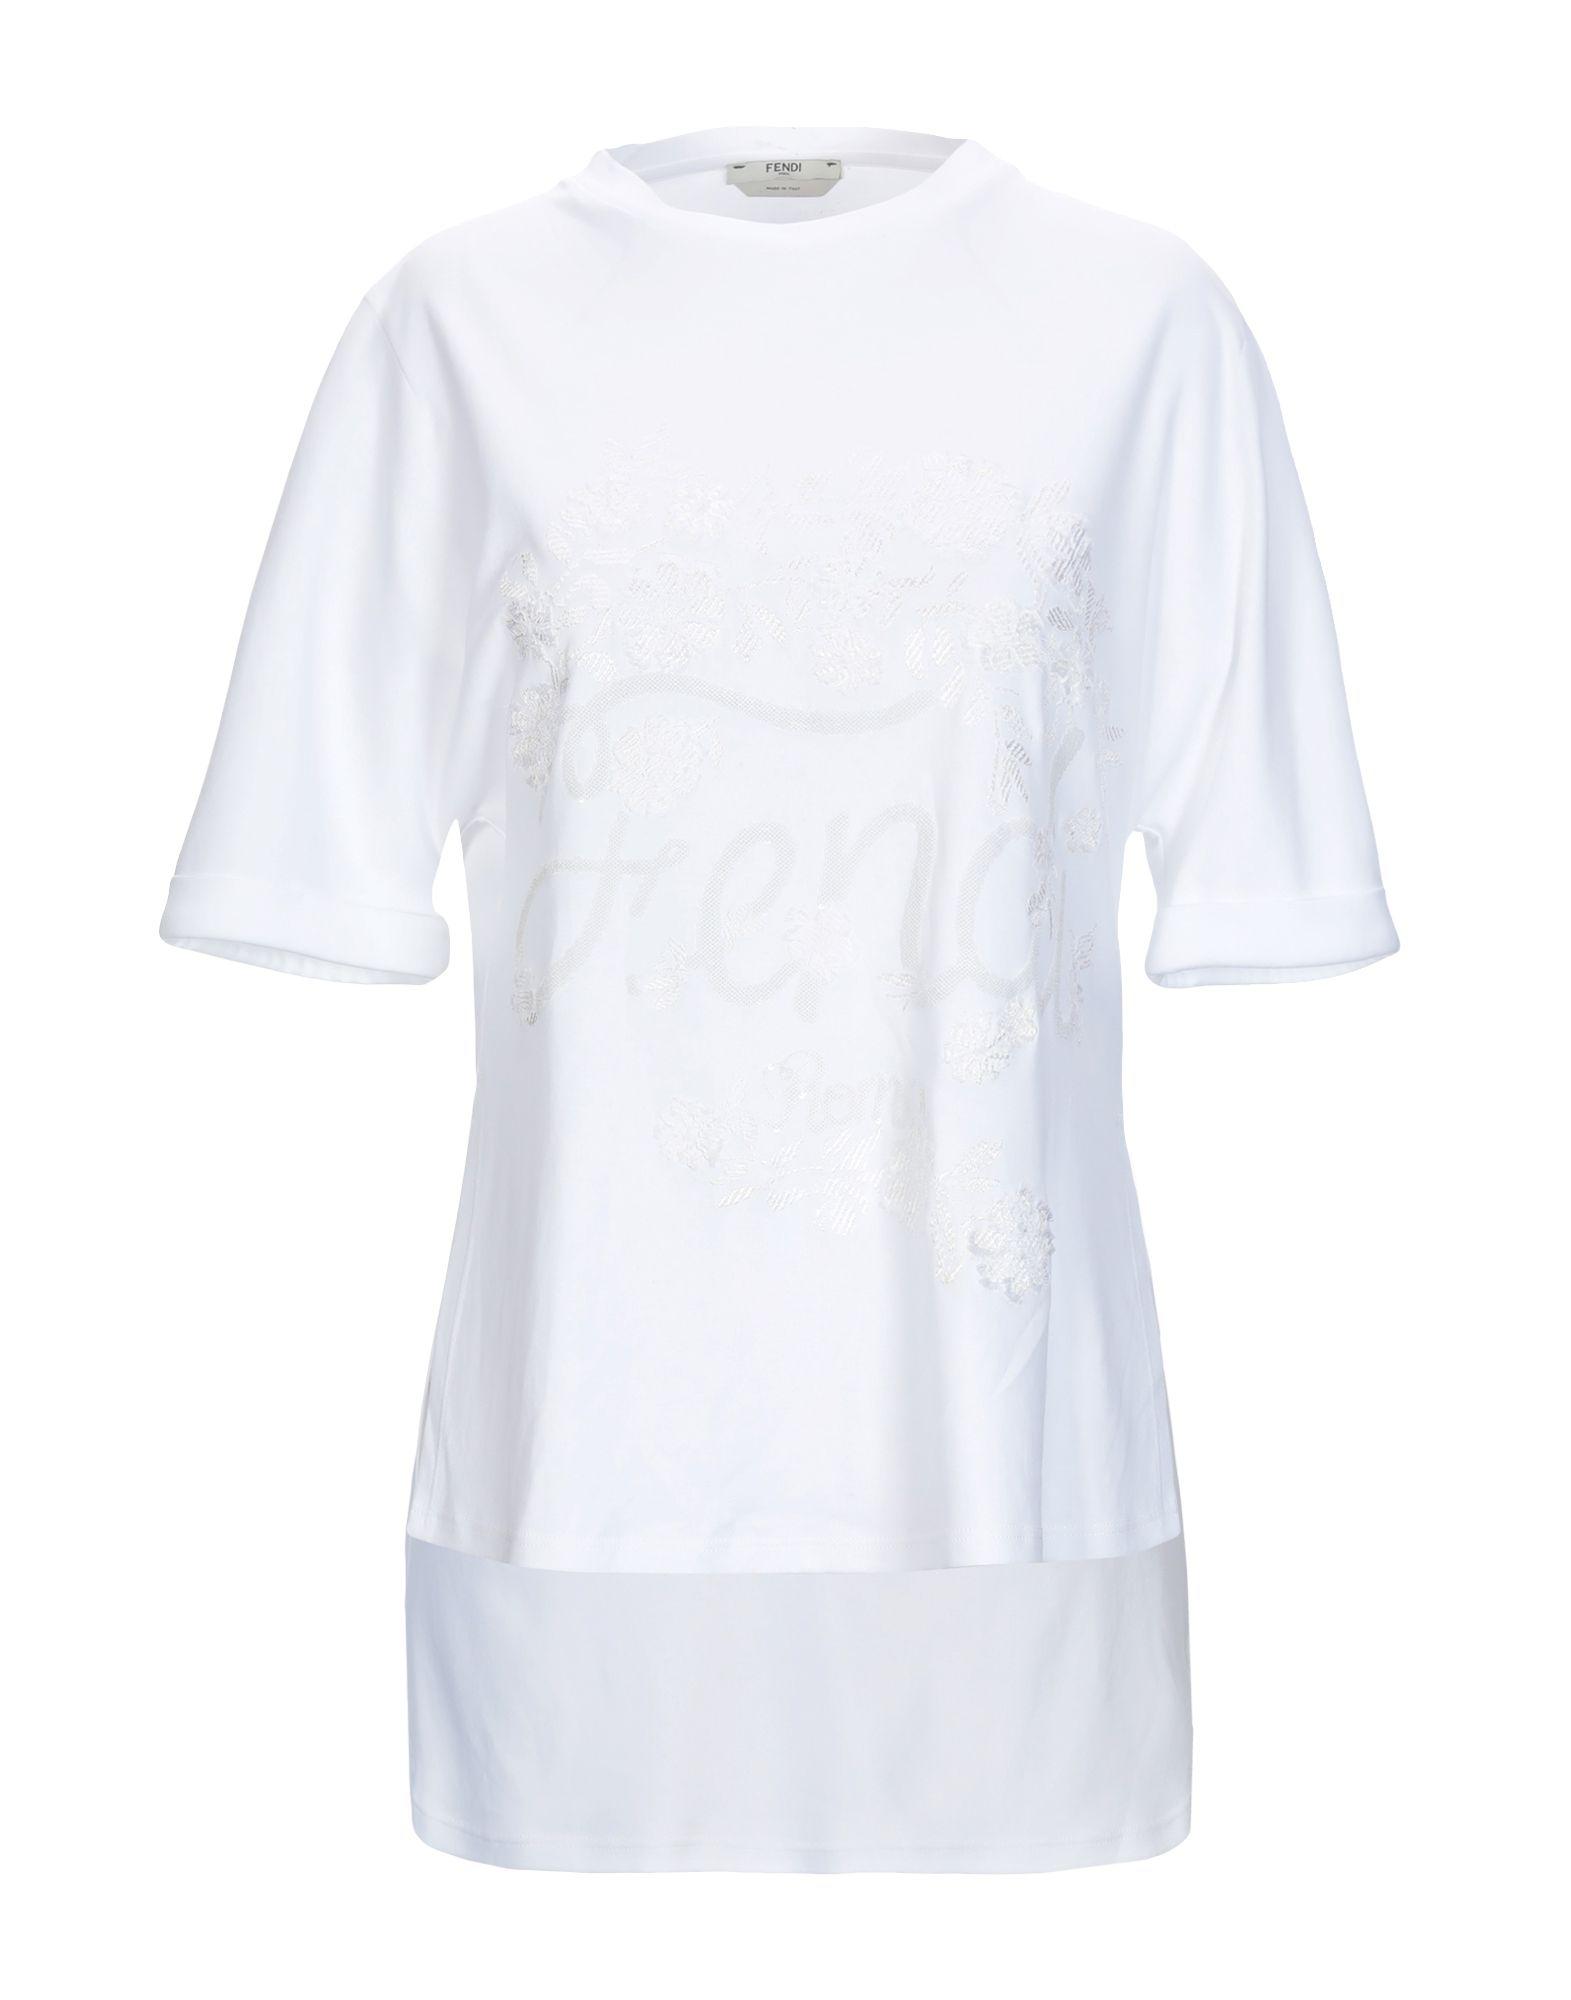 Fendi Cotton T-shirt in White - Lyst